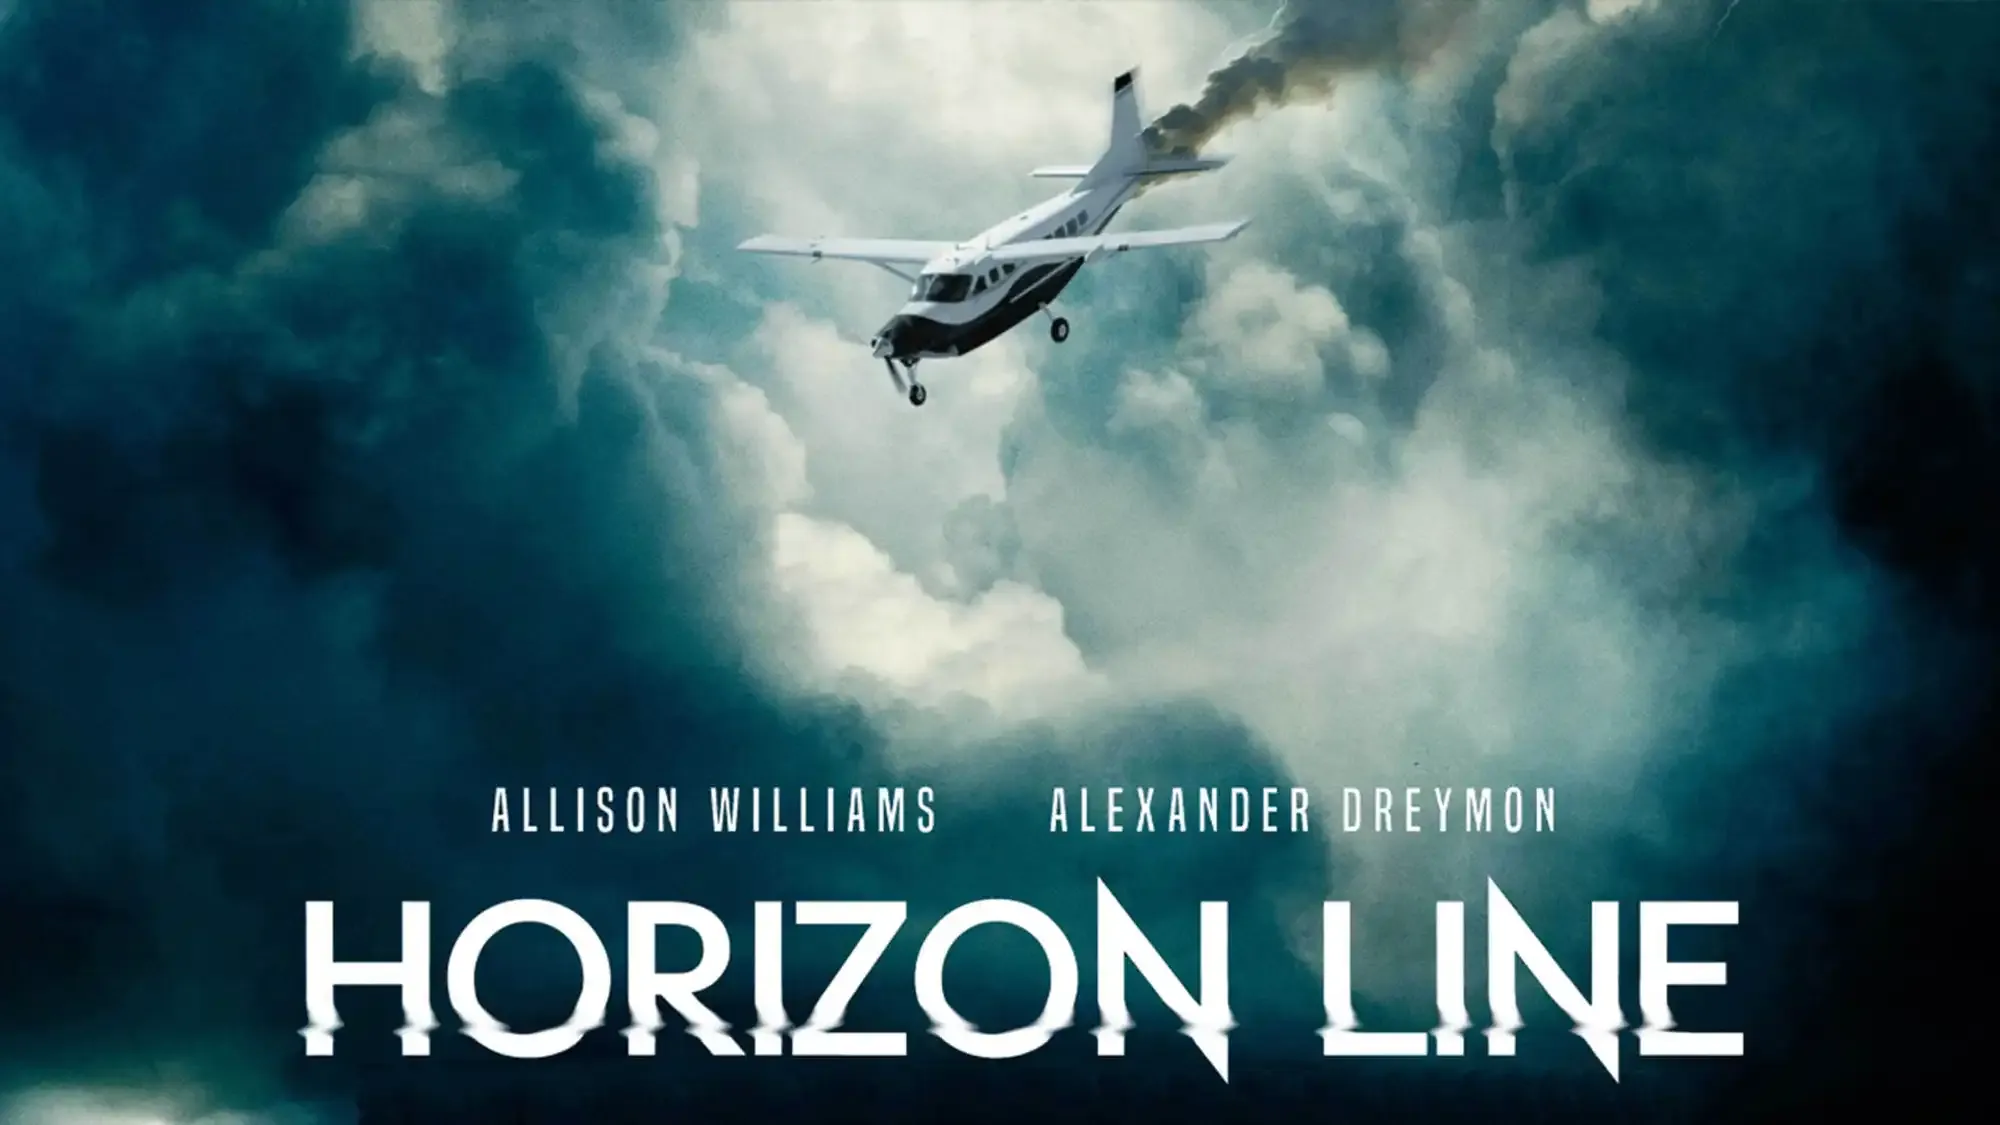 Horizon Line movie review